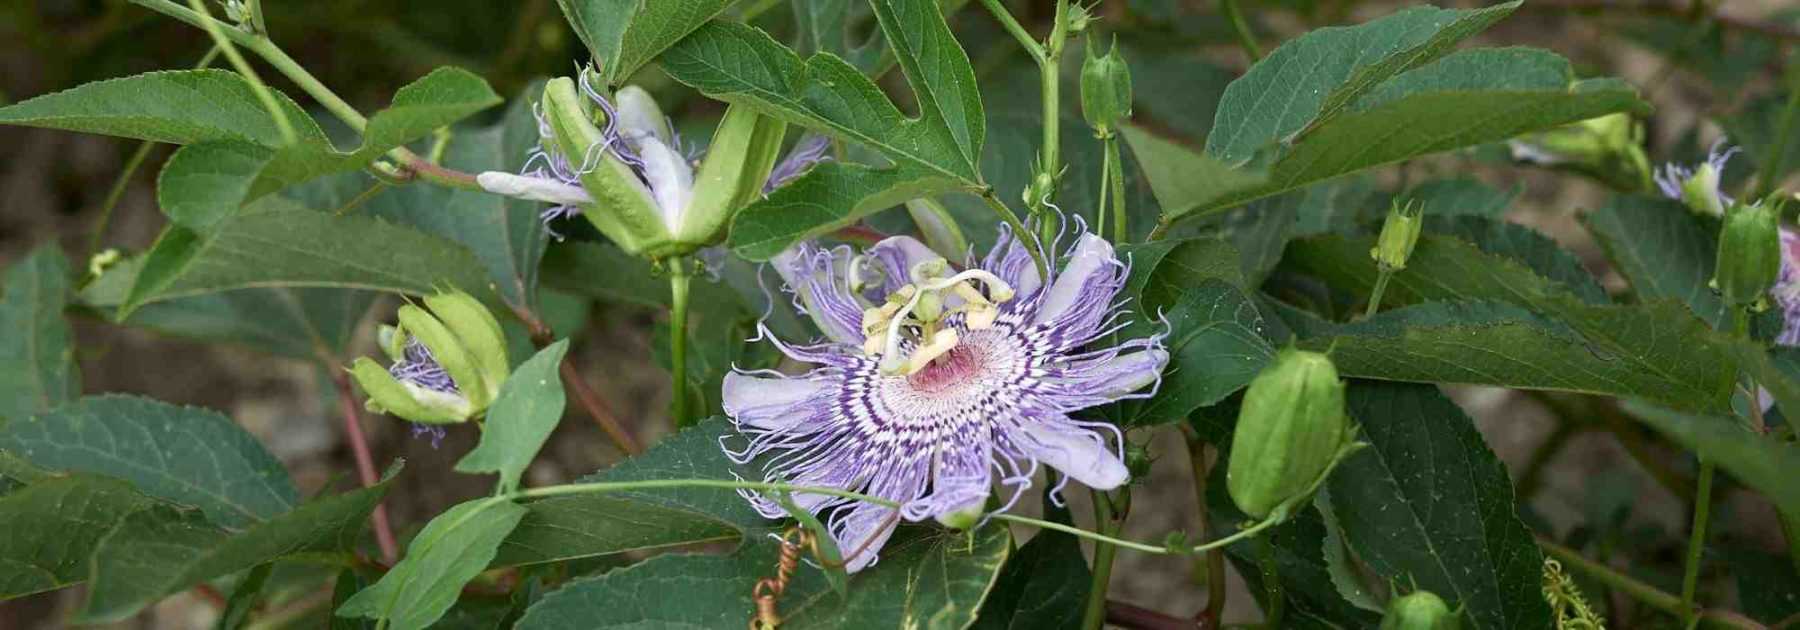 Tisane de Passiflore Bio - Passiflora incarnata - partie aérienne